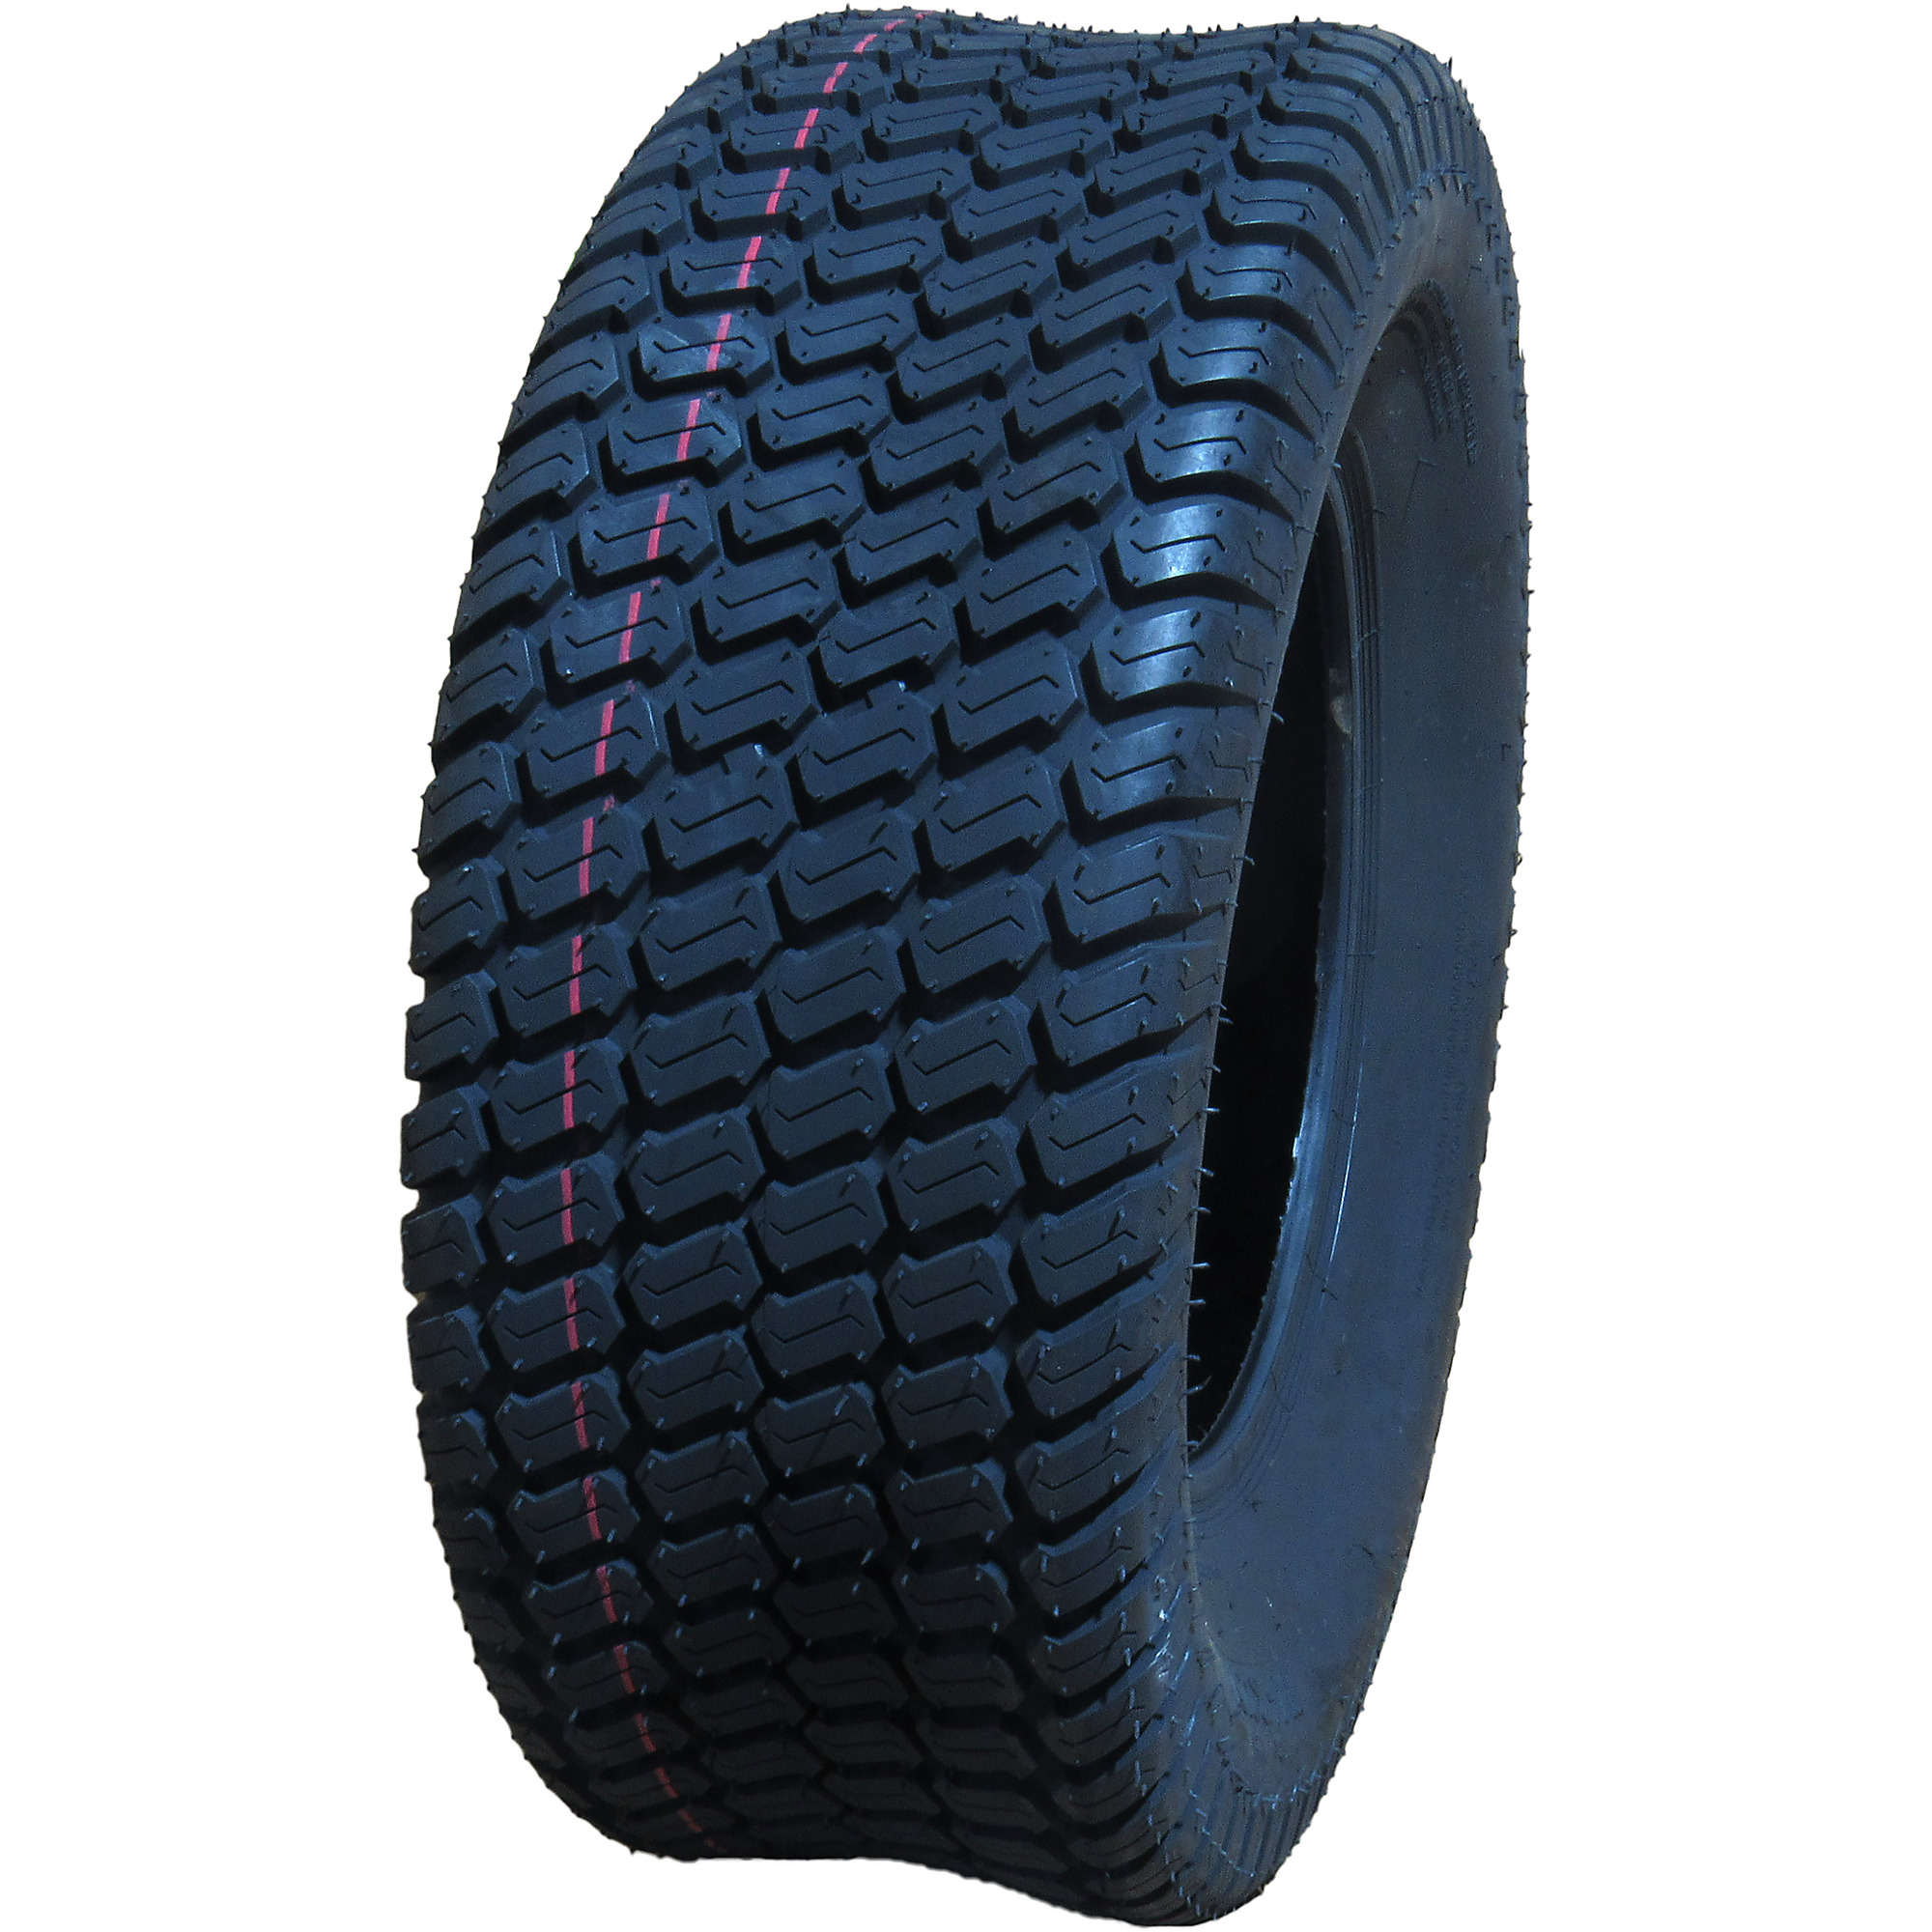 Lawn Garden Tire, SU05 Turf, Tire Size 24X9.50-12, Load Range Rating B, Model - HI-RUN WD1289